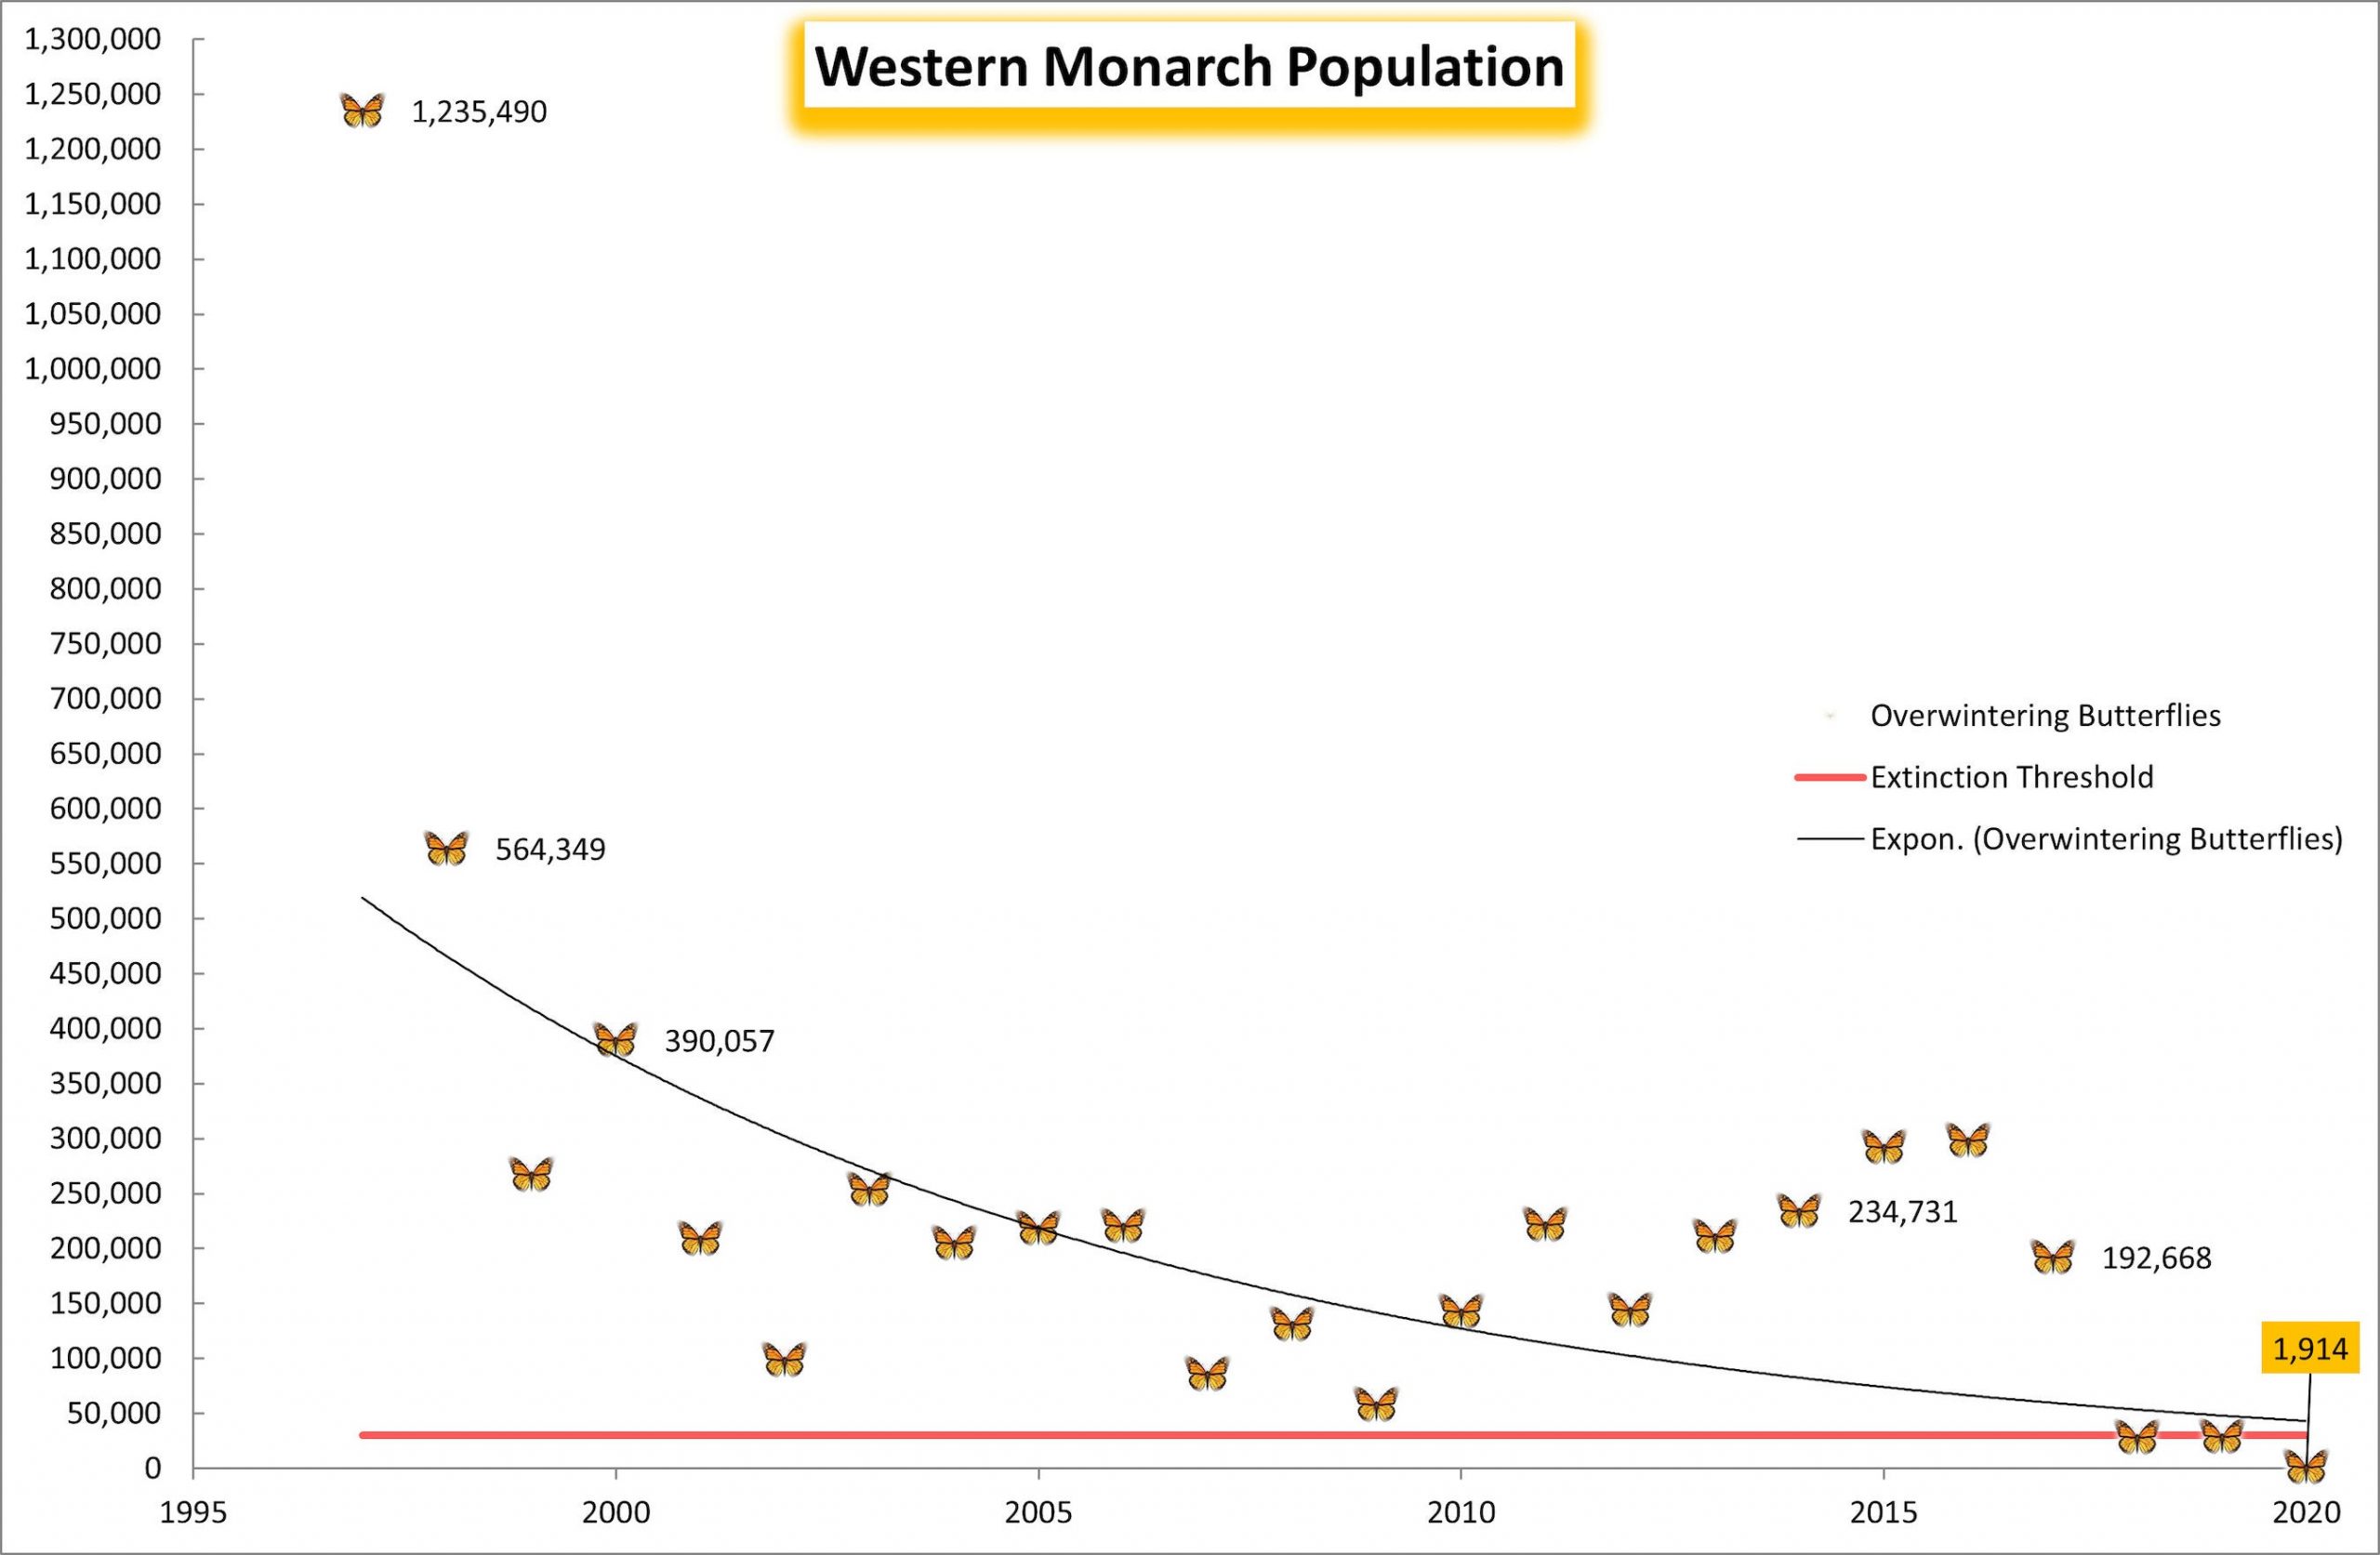 graph shows declining population of western monarch butterflies